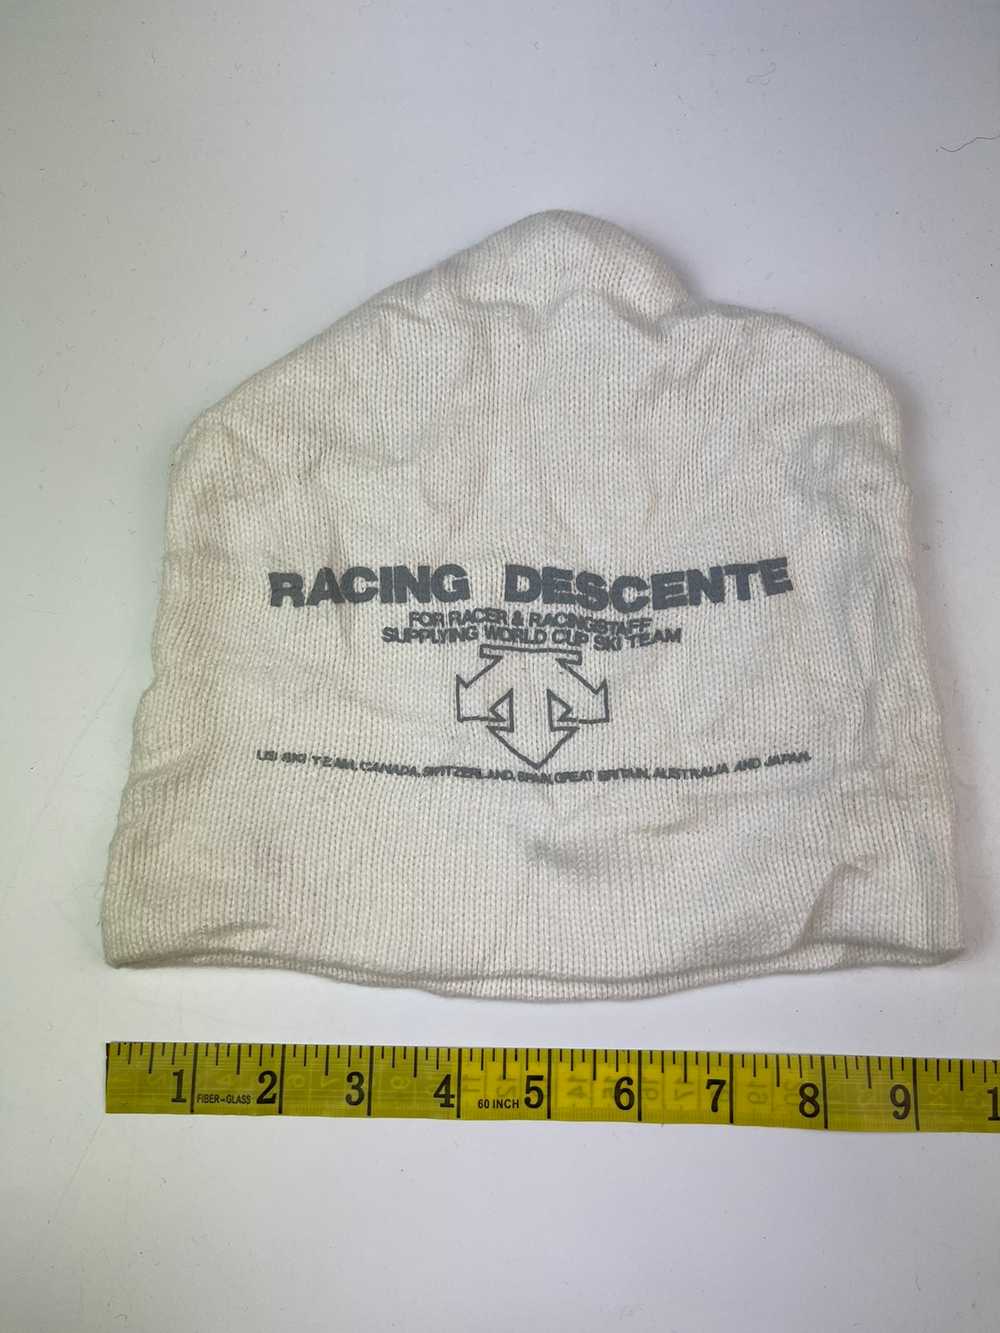 Descente - Descente Racing Beanie Hats Snow Caps - image 7